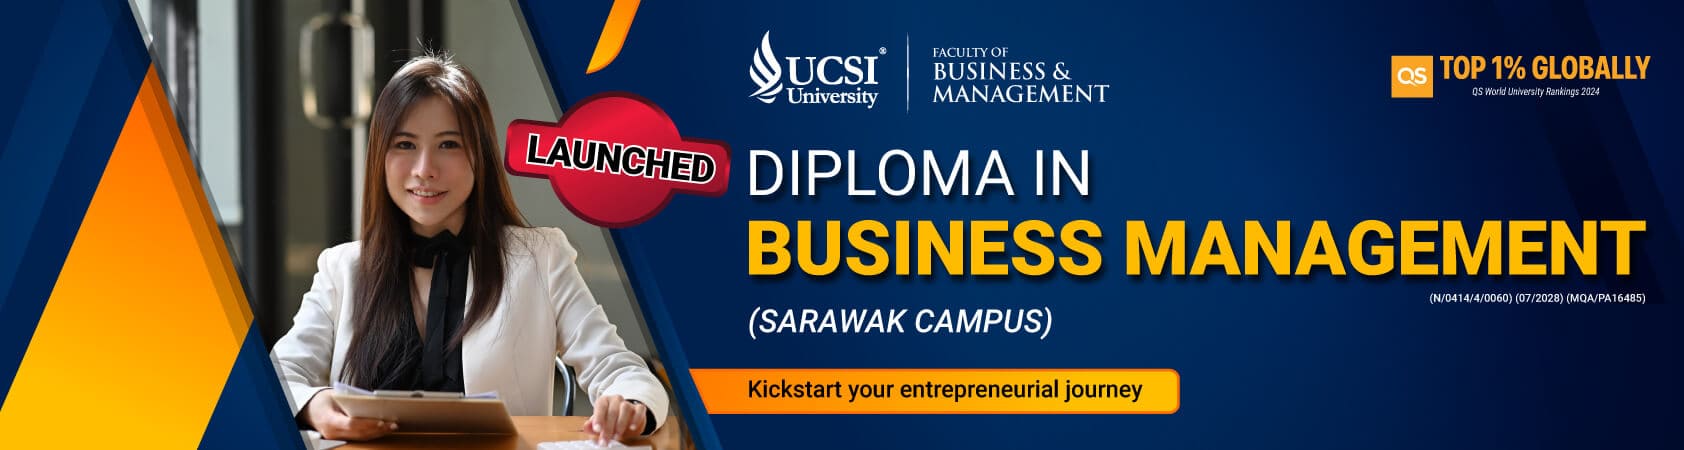 Diploma in Business Management Sarawak Campus